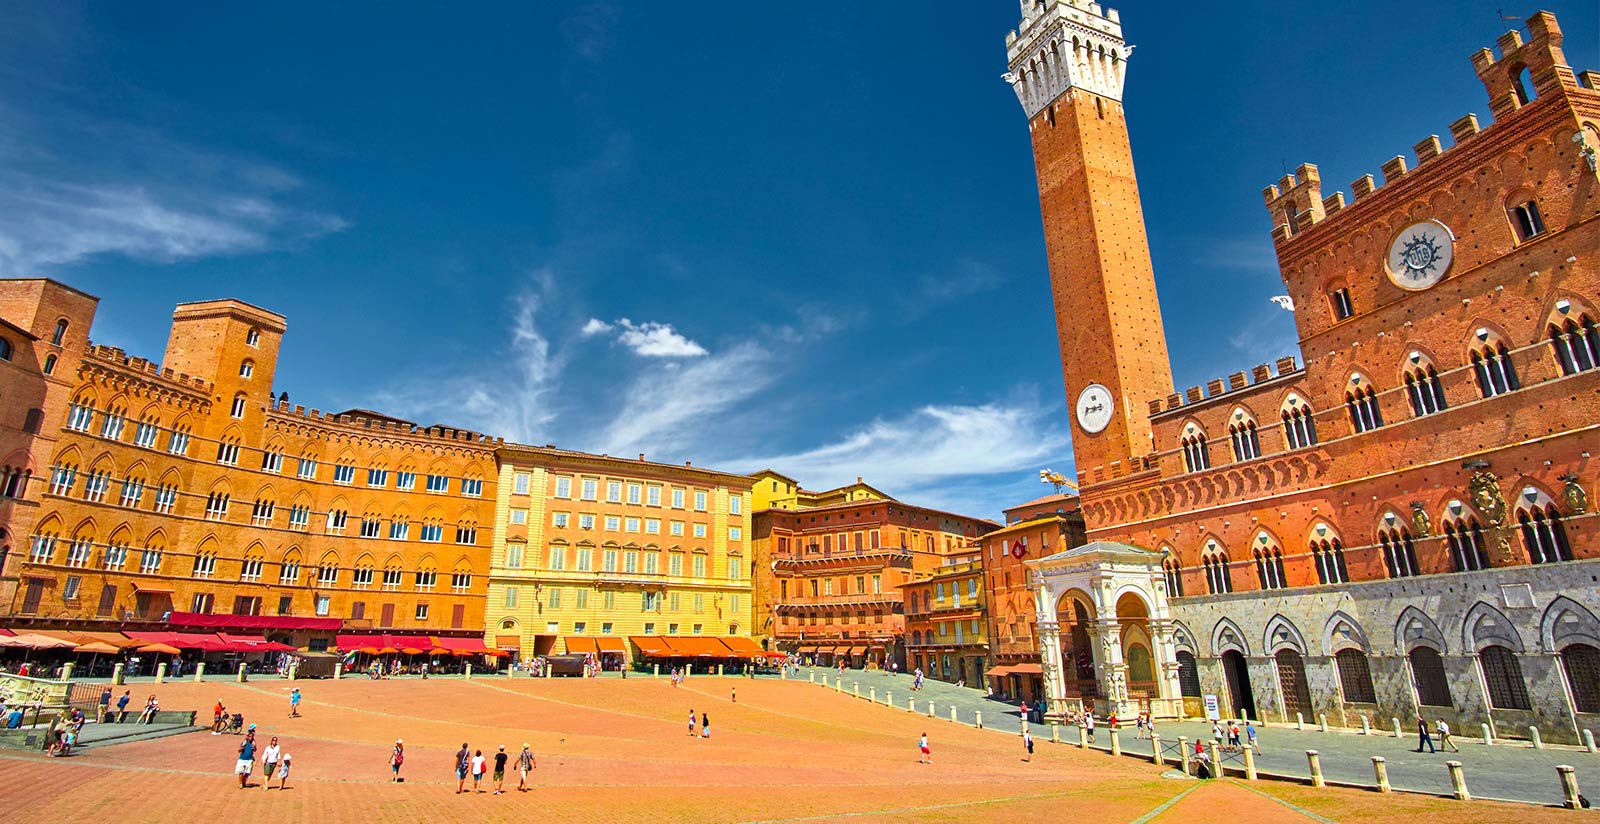 Grand Hotel Imperiale - Siena Walking tour 2